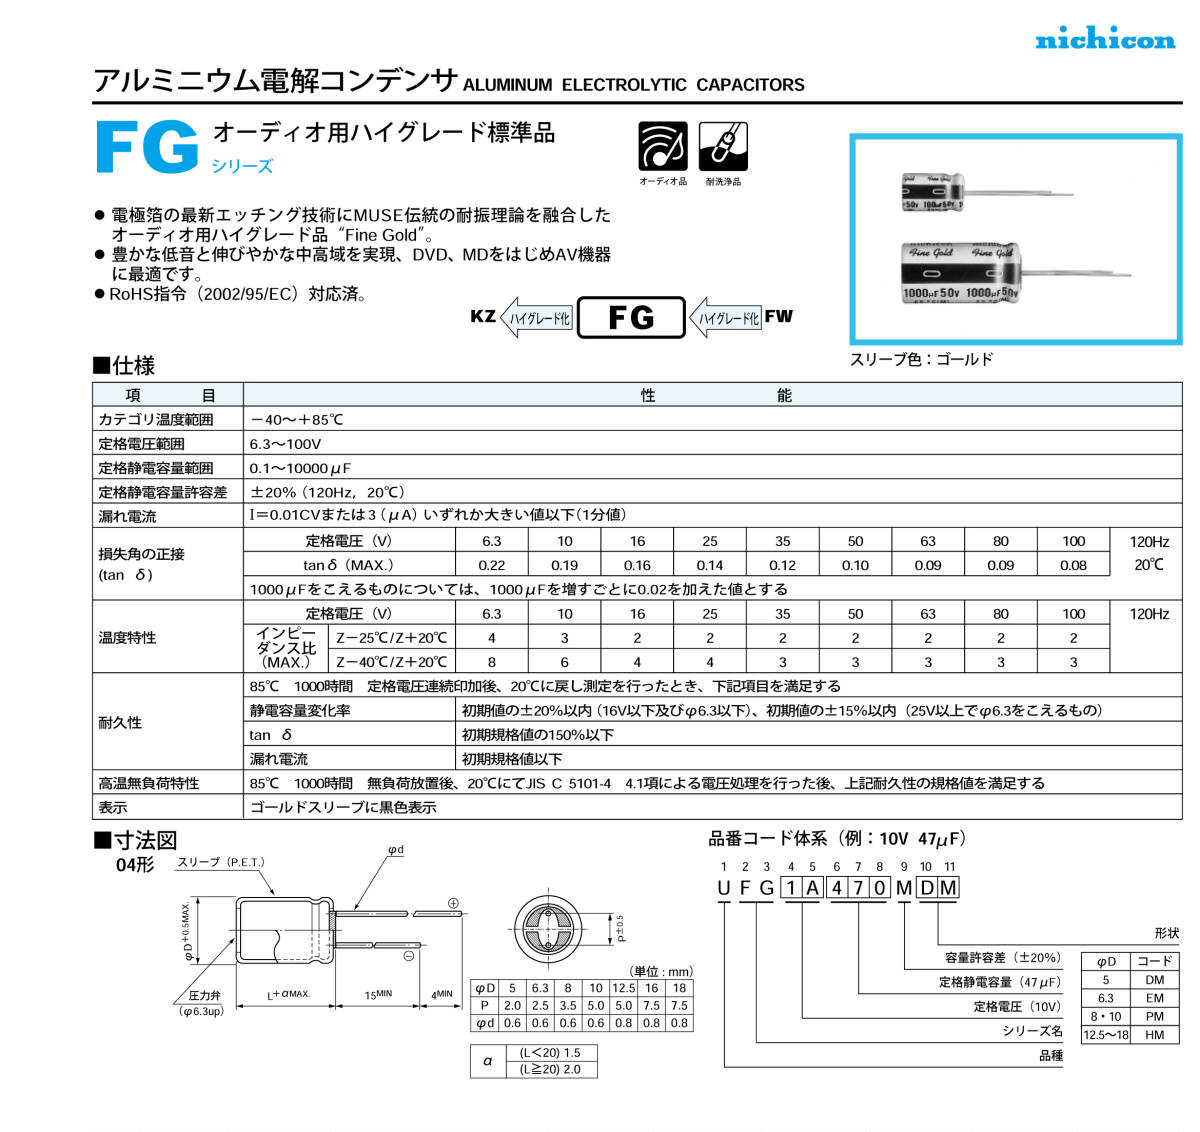 [1] Nichicon FG 330μF 50V 85*C nichicon FG Fine Gold fine Gold audio for electrolytic capacitor 1 piece new goods unused 